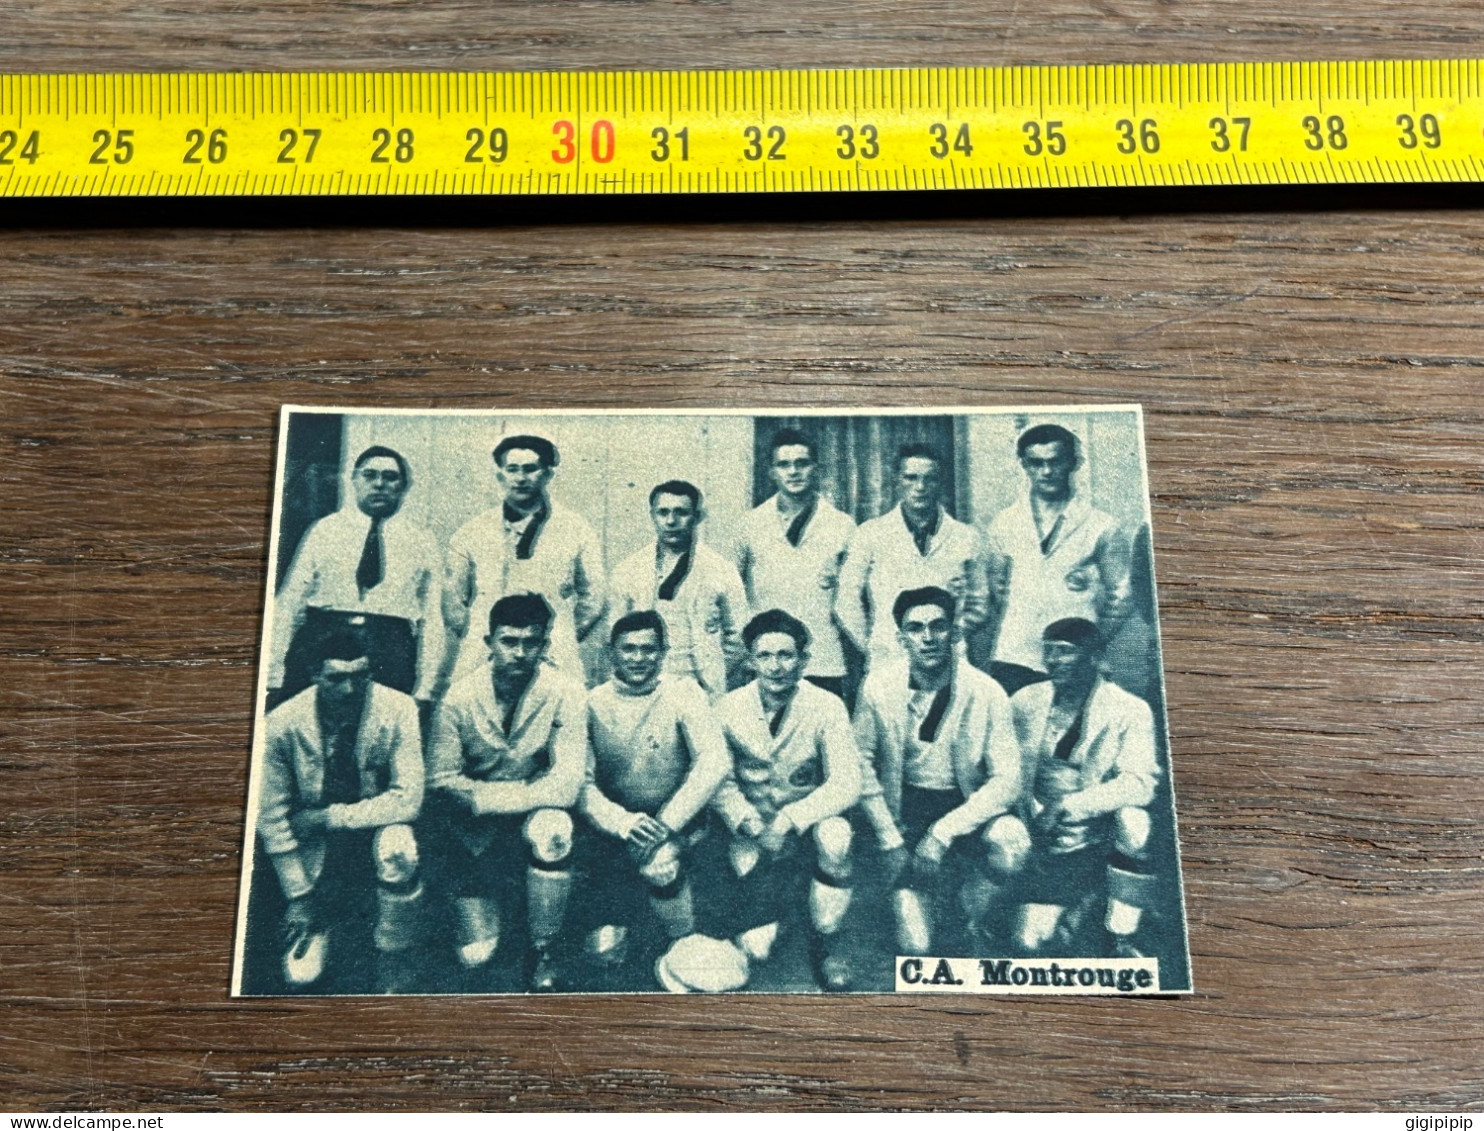 1928 MI équipe Football C.A. Montrouge - Colecciones